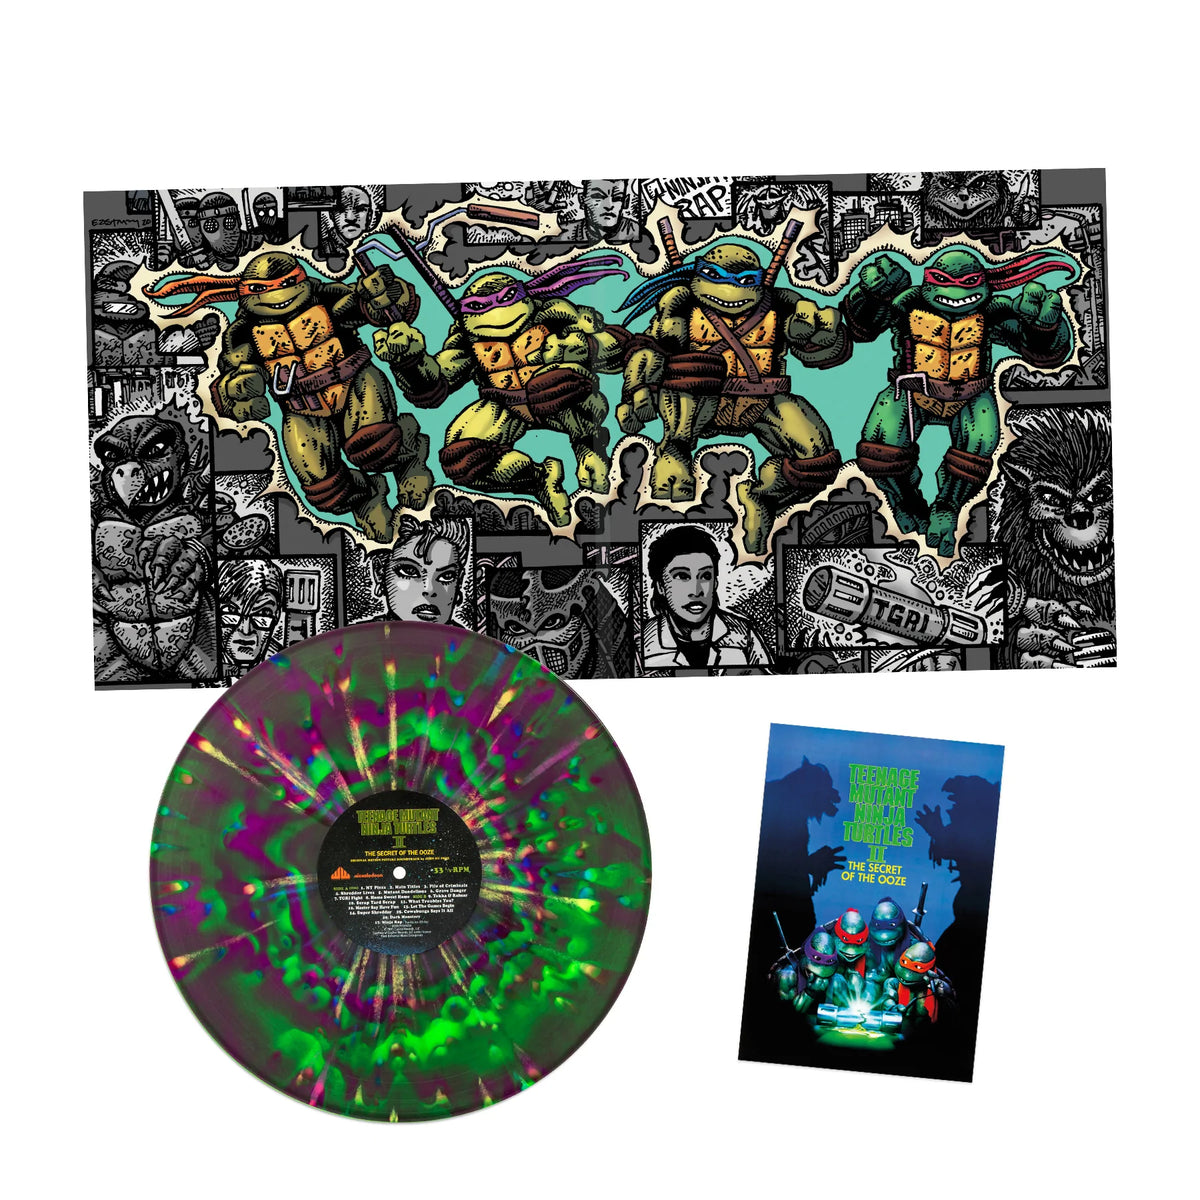 Teenage Mutant Ninja Turtles Part II: The Secret of the Ooze Soundtrack (Distro Title)